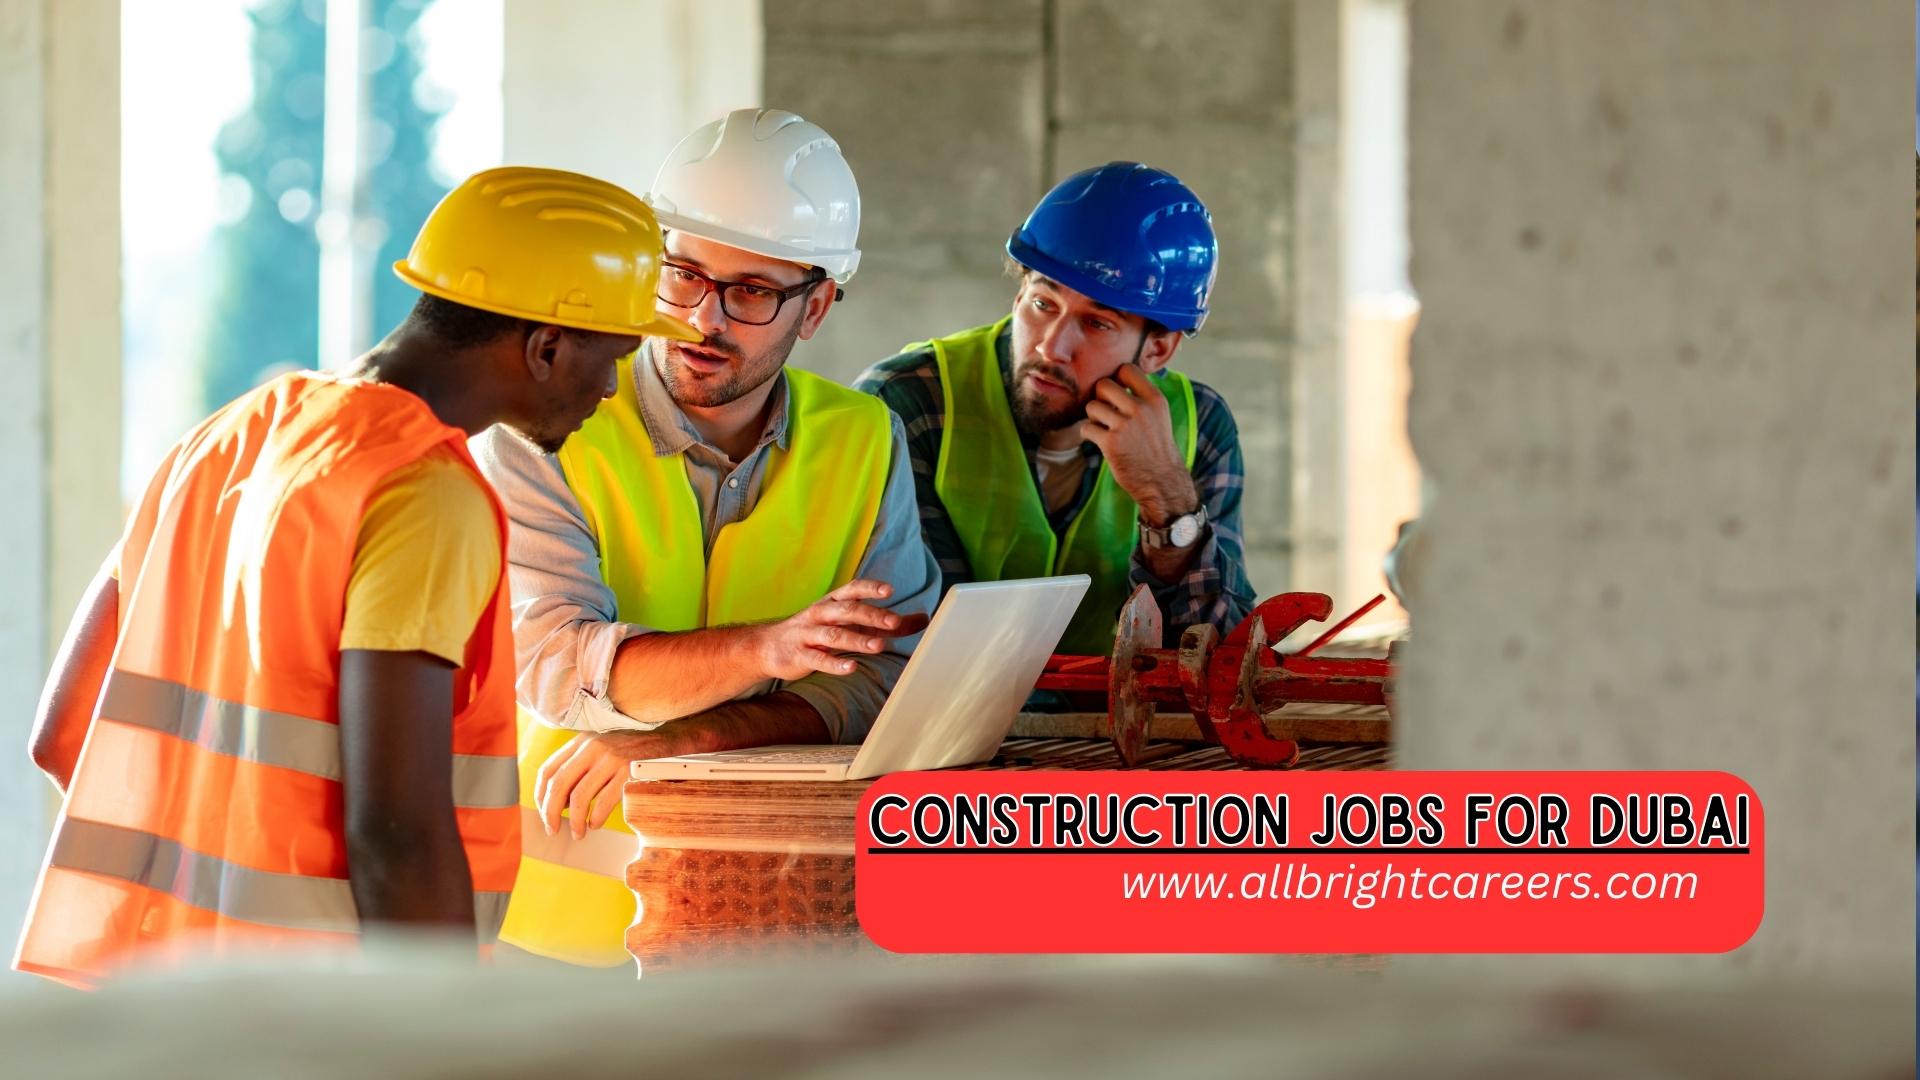 Construction jobs For Dubai